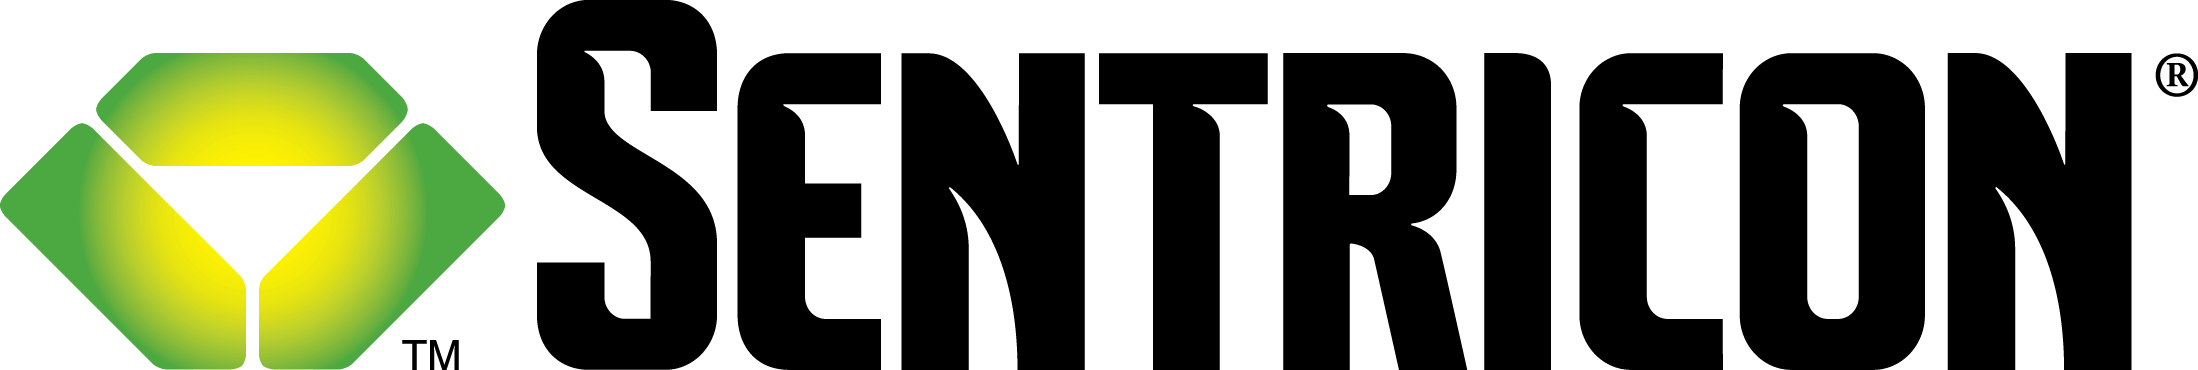 Logo of Sentricon, a pest control company